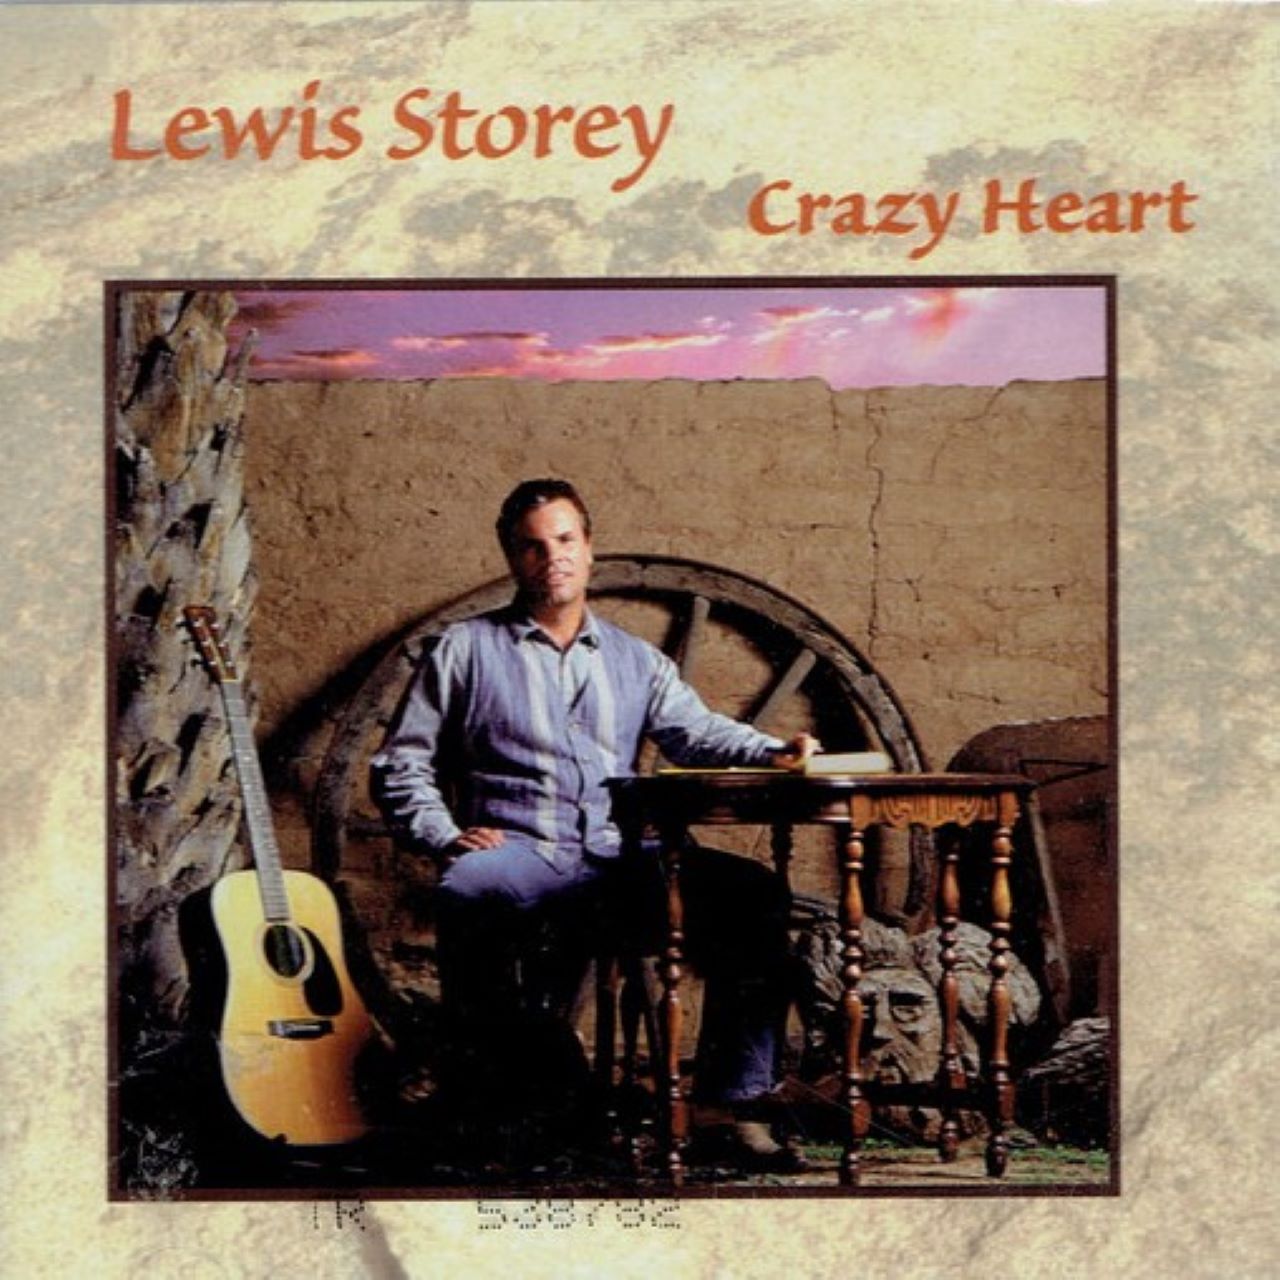 Lewis Storey - Crazy Heart cover album